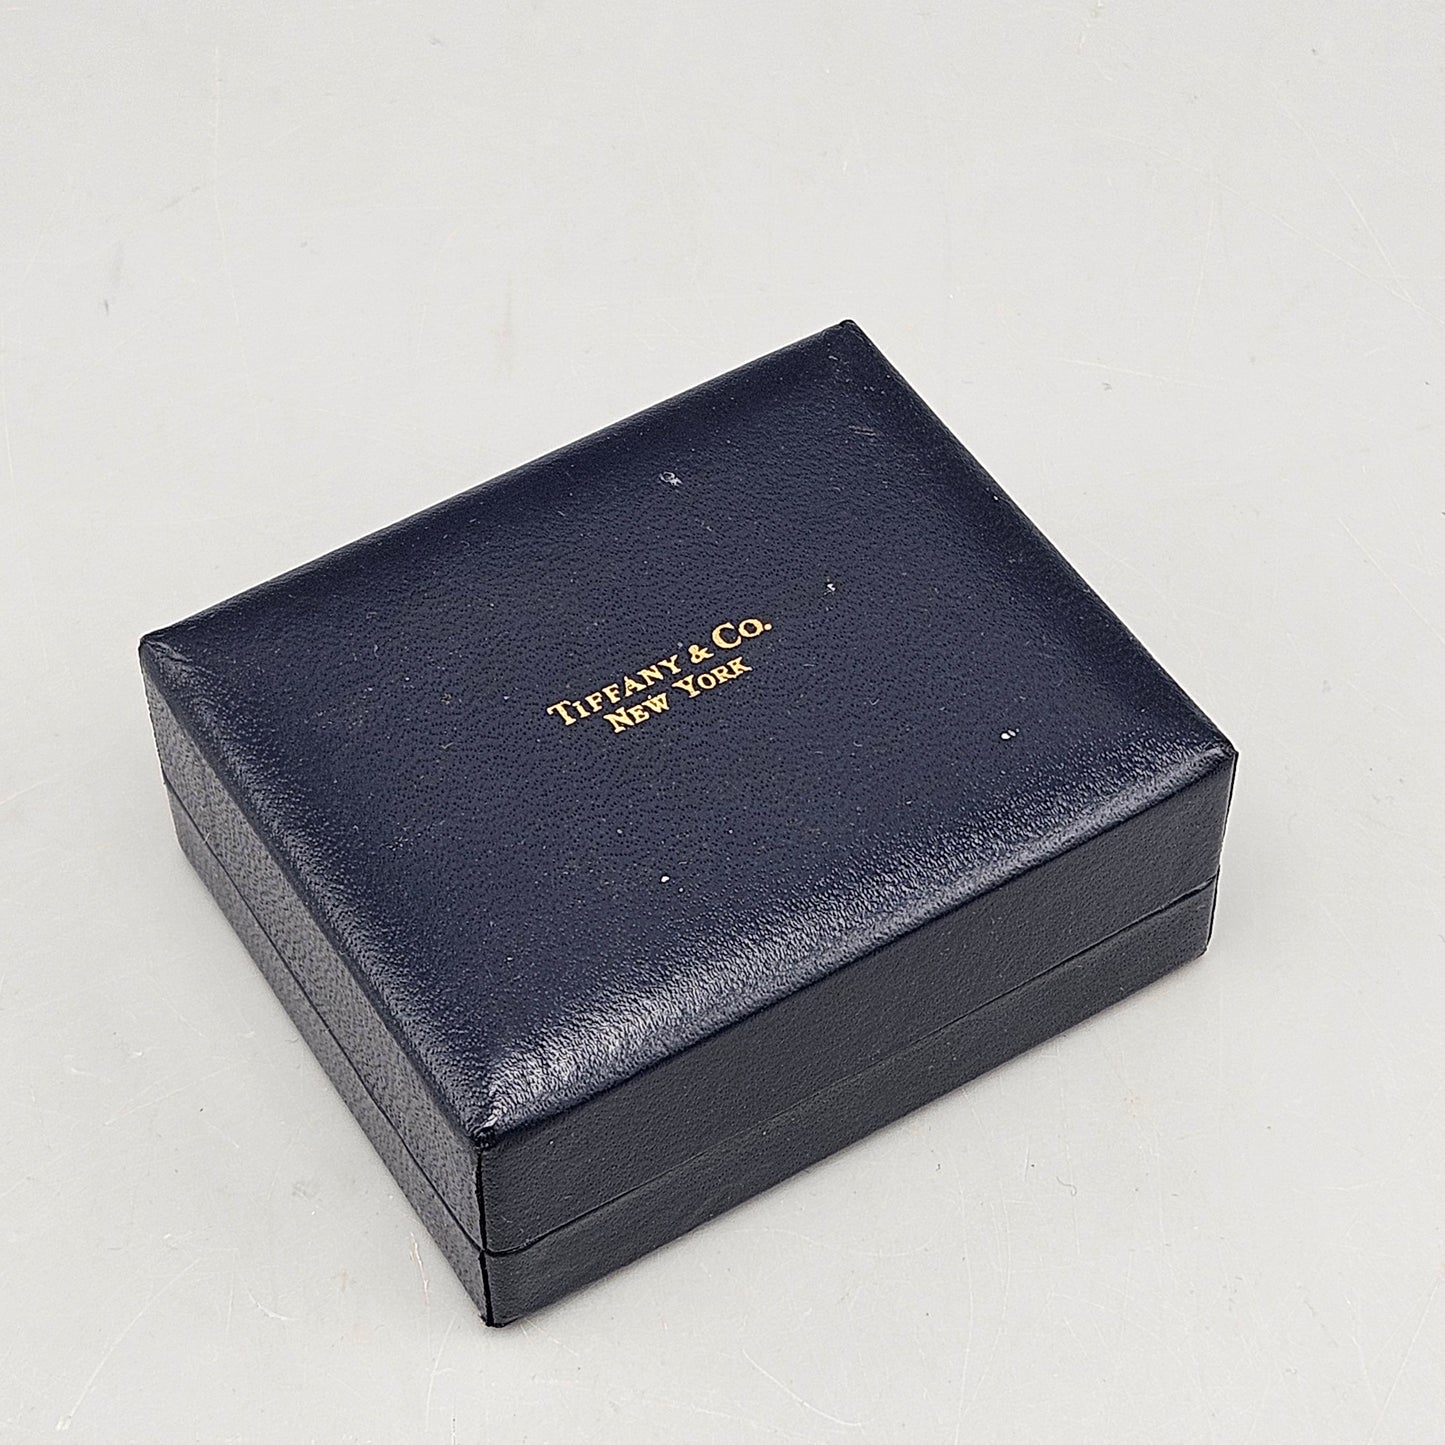 Vintage Tiffany & Company Jewelry Box - Dark Blue